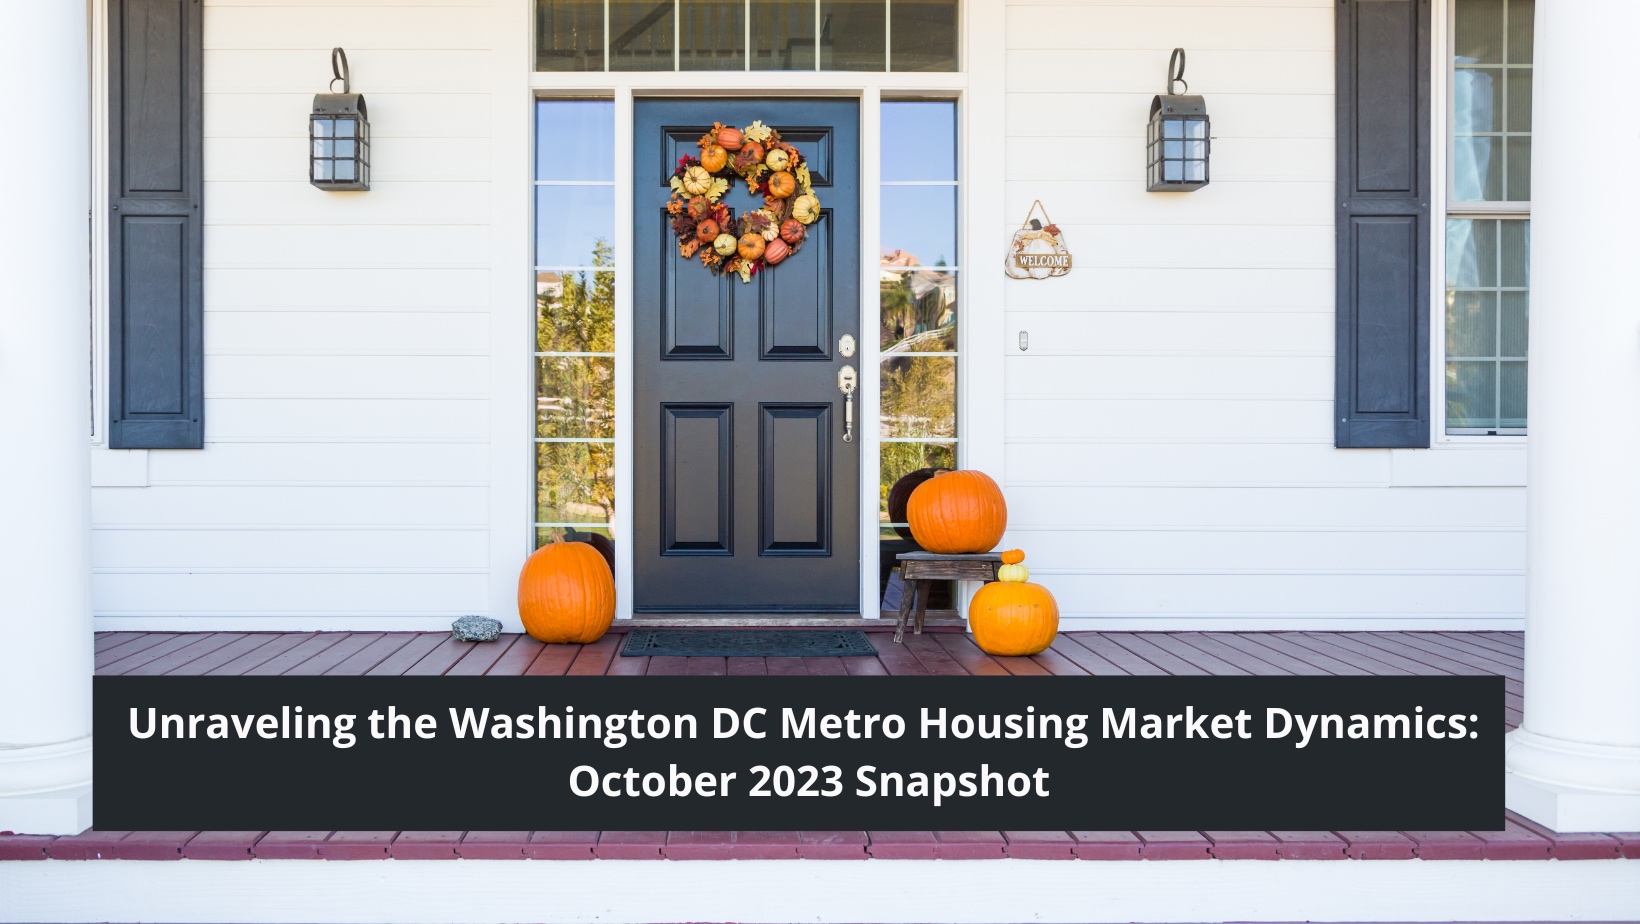 https://assets.site-static.com/userFiles/2077/image/Unraveling_the_Washington_DC_Metro_Housing_Market_Dynamics_October_2023_Snapshot.jpg